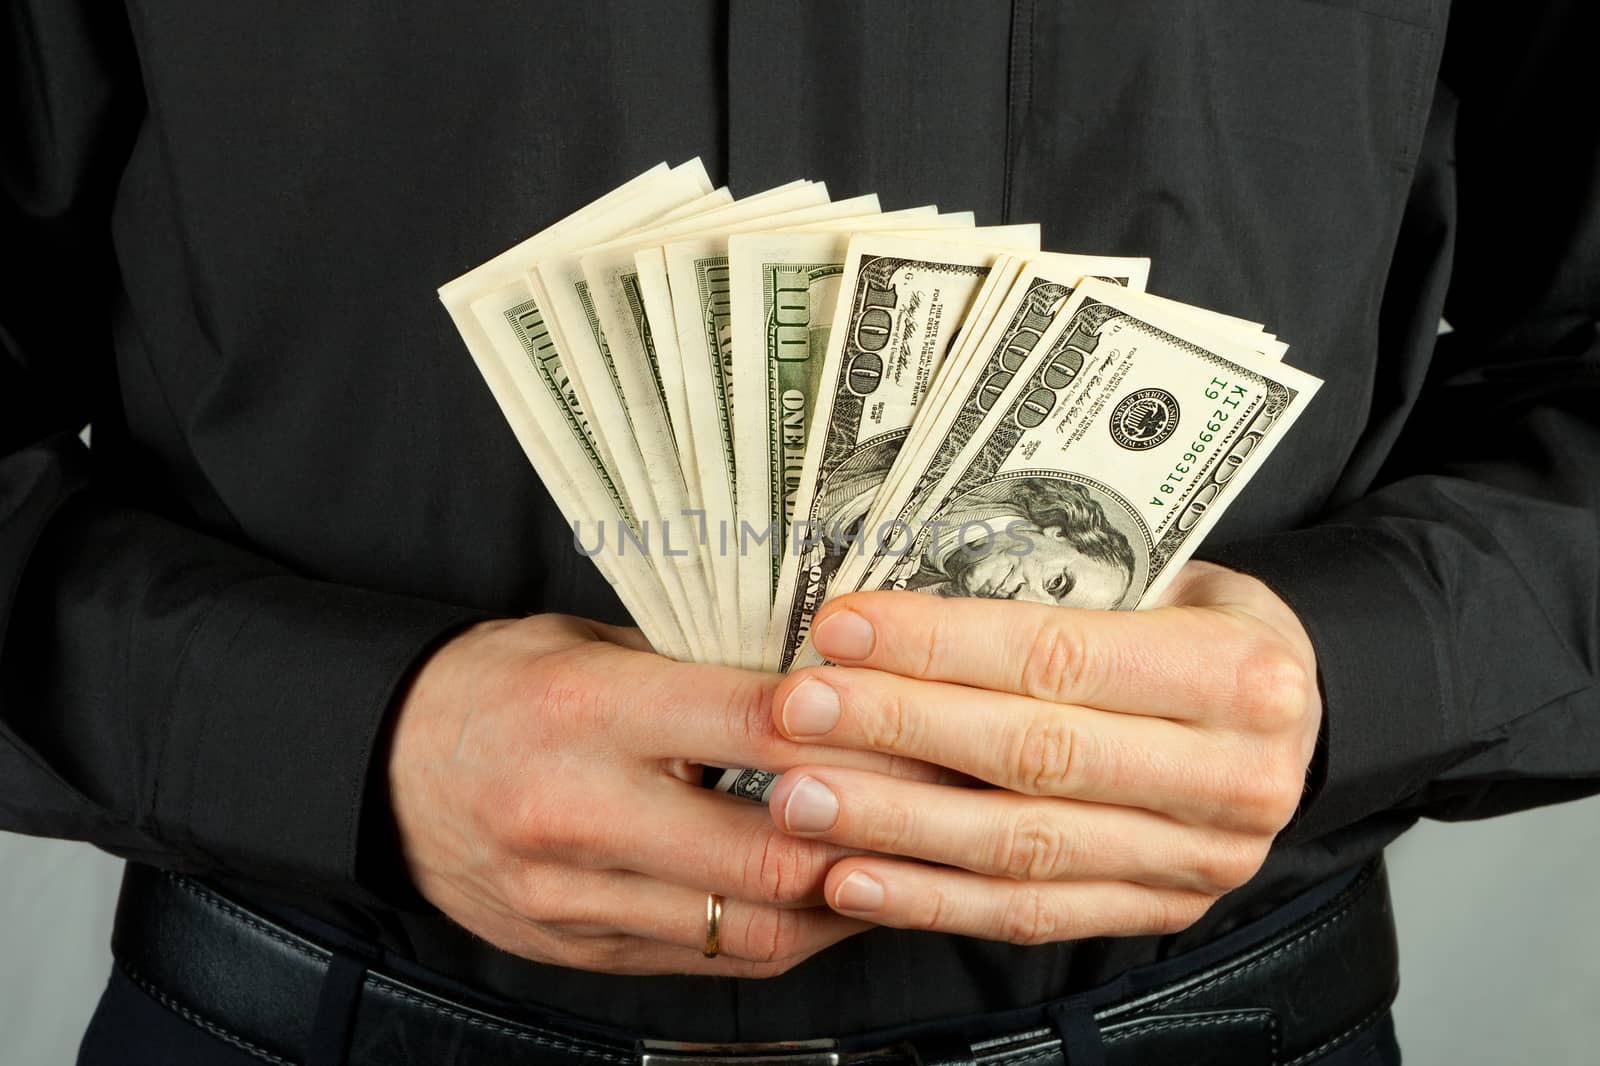 man holding money in hands dollar usa